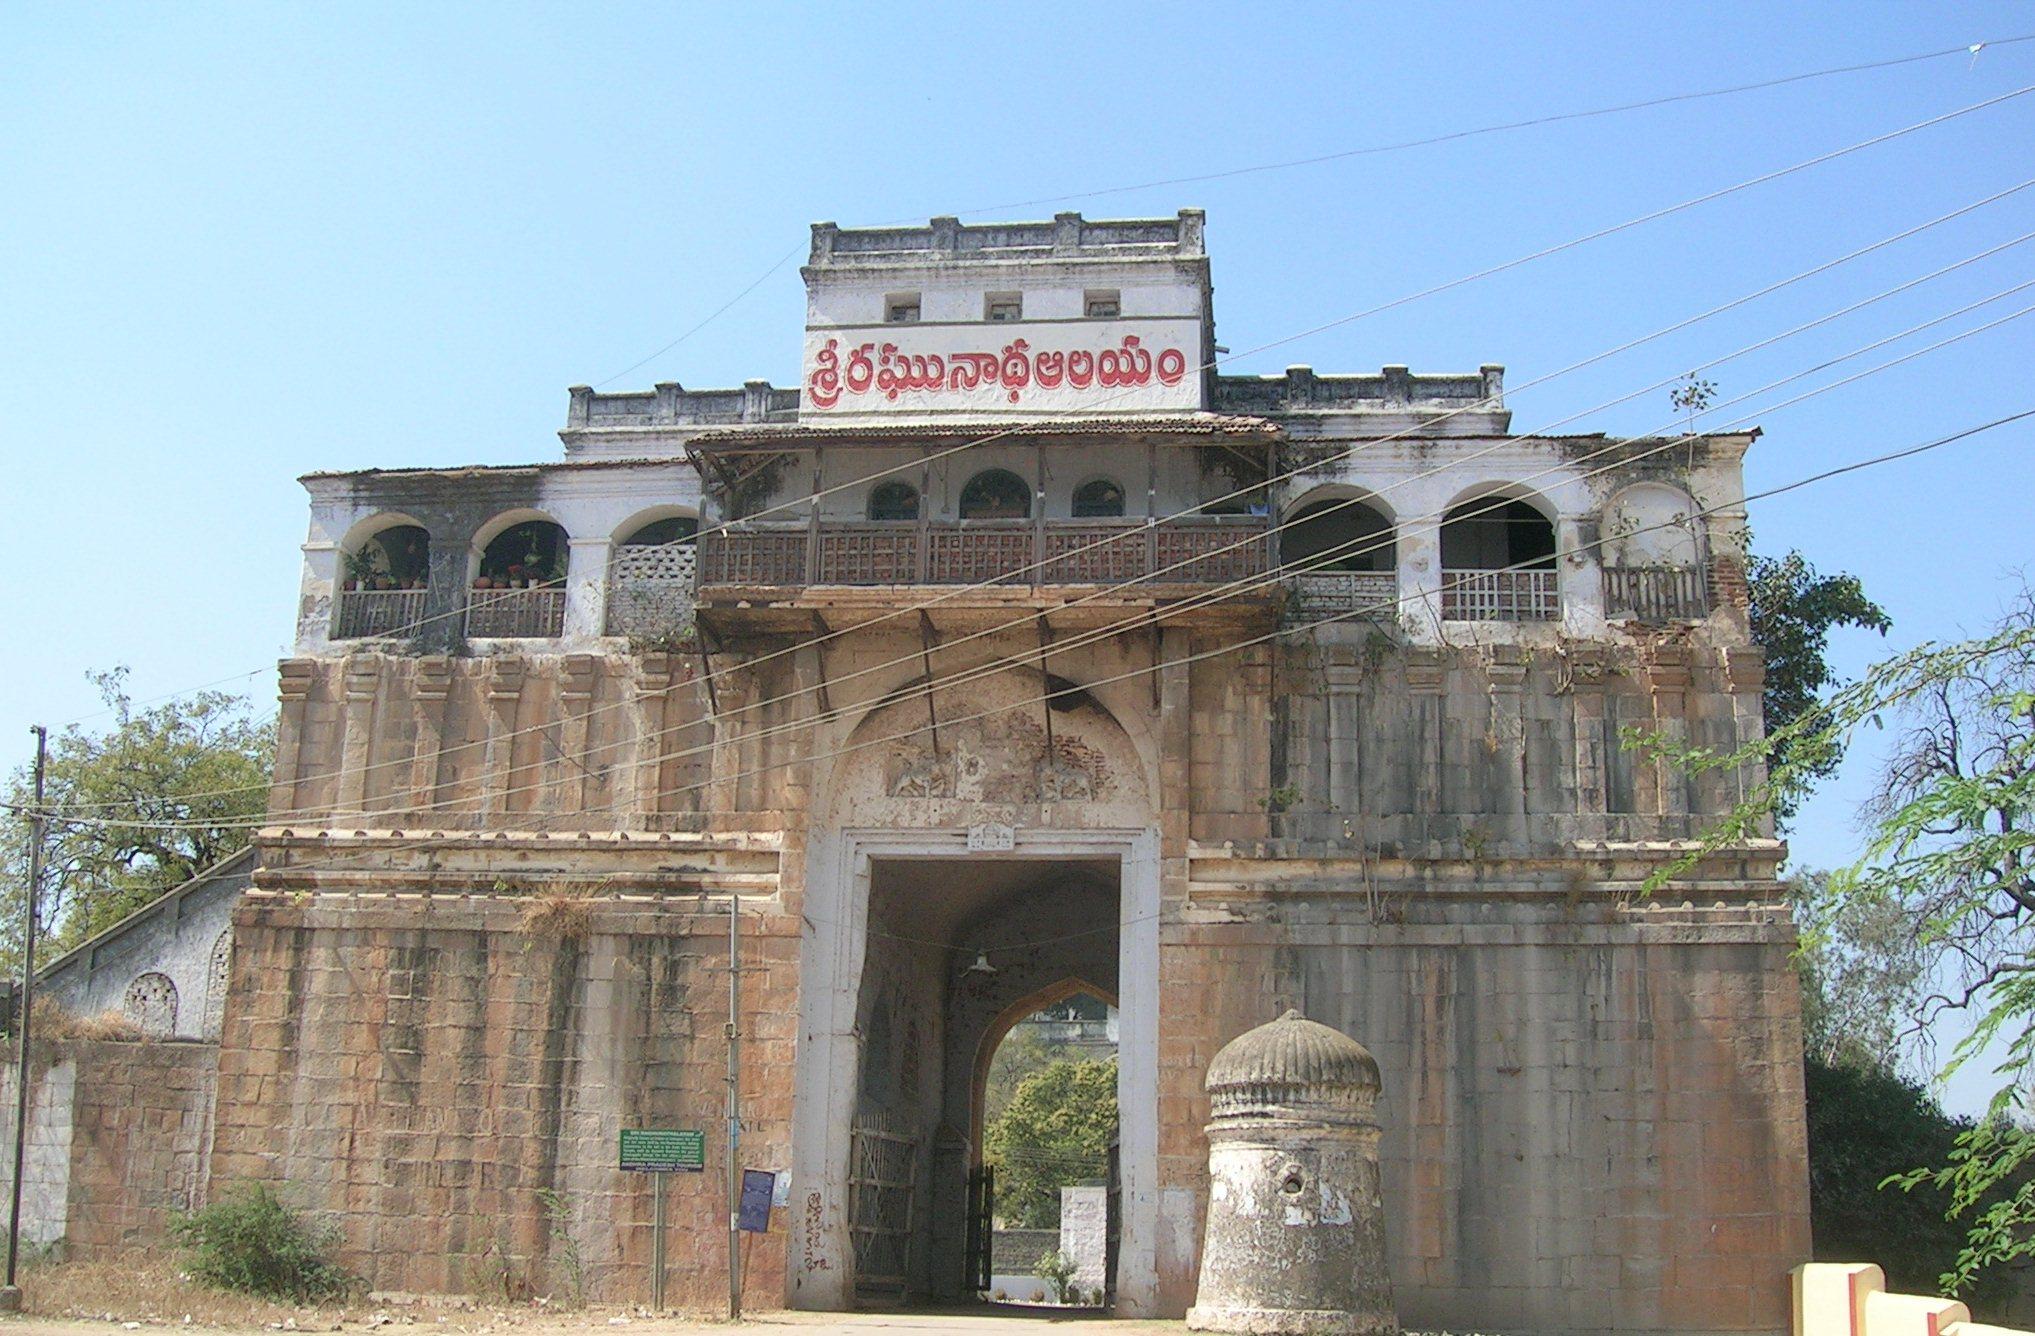 Nizamabad Fort - Wikipedia